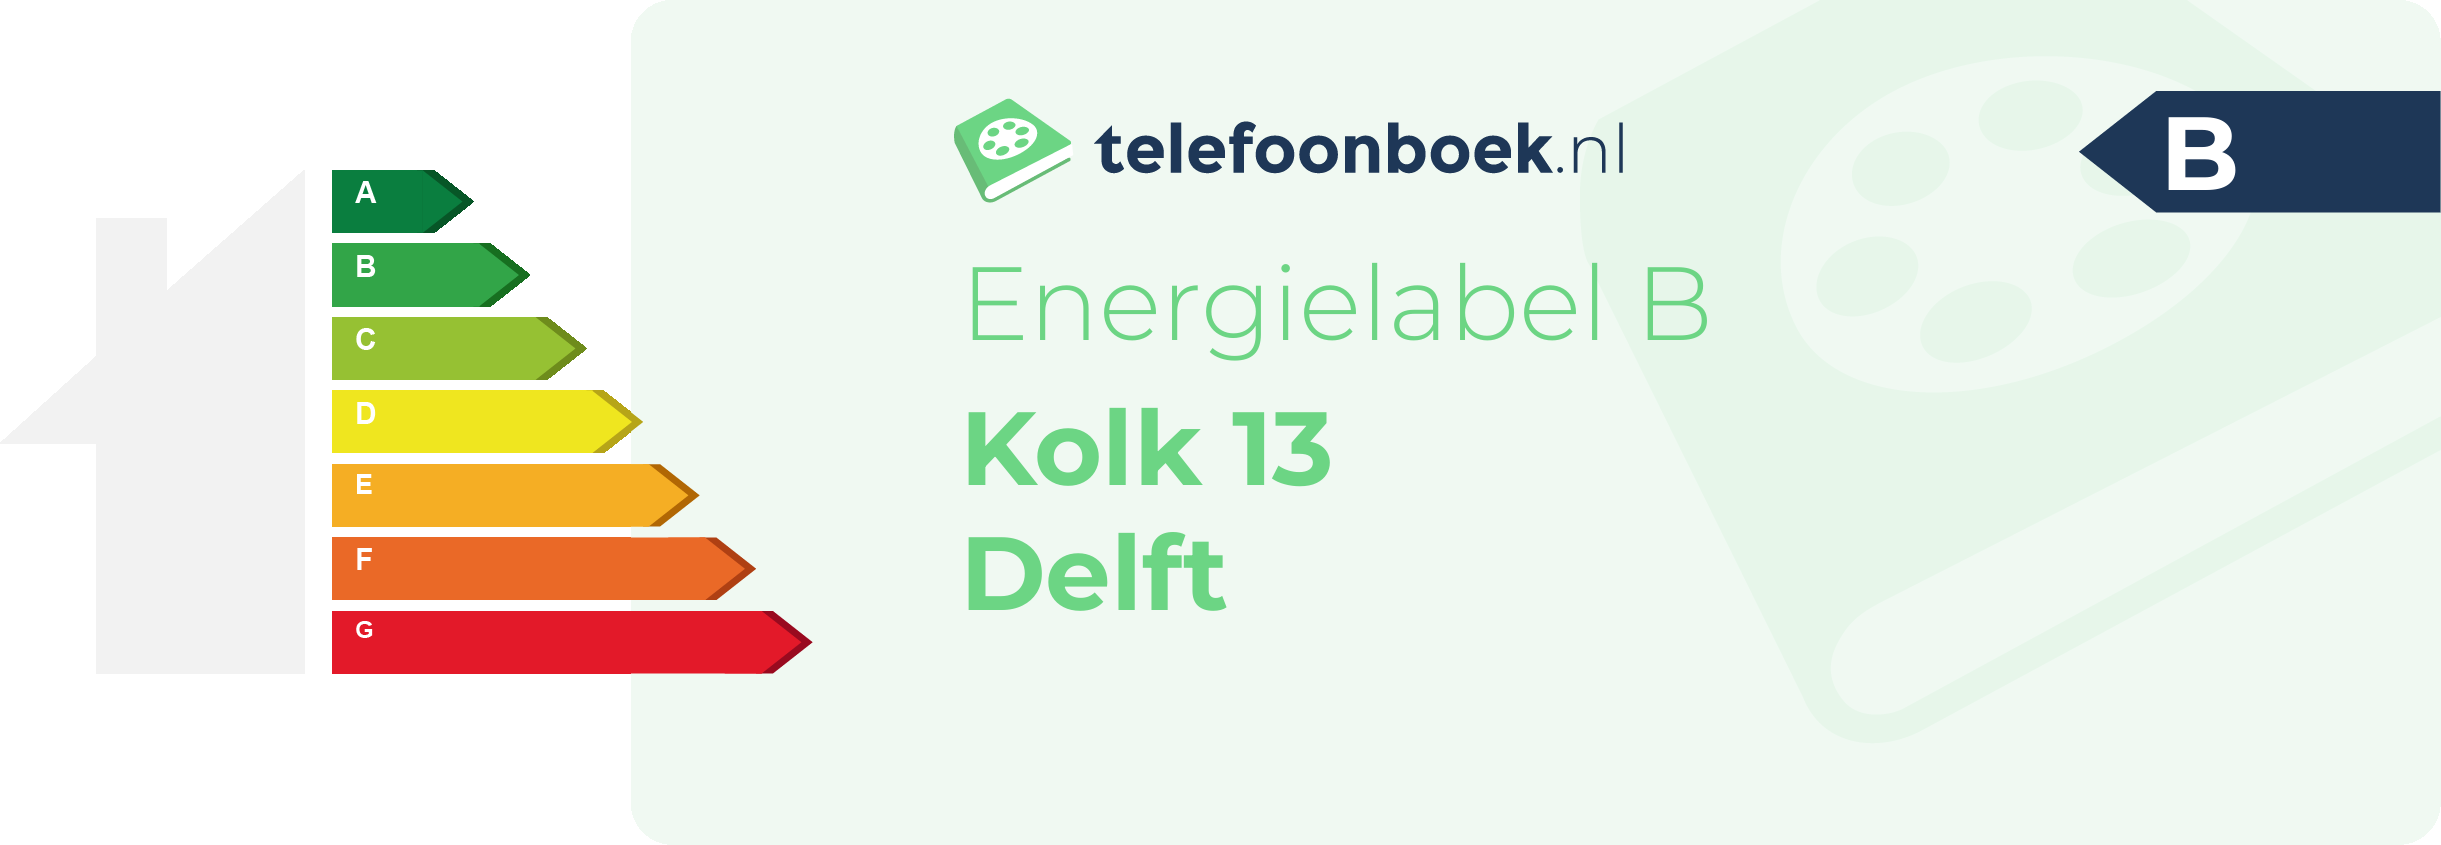 Energielabel Kolk 13 Delft